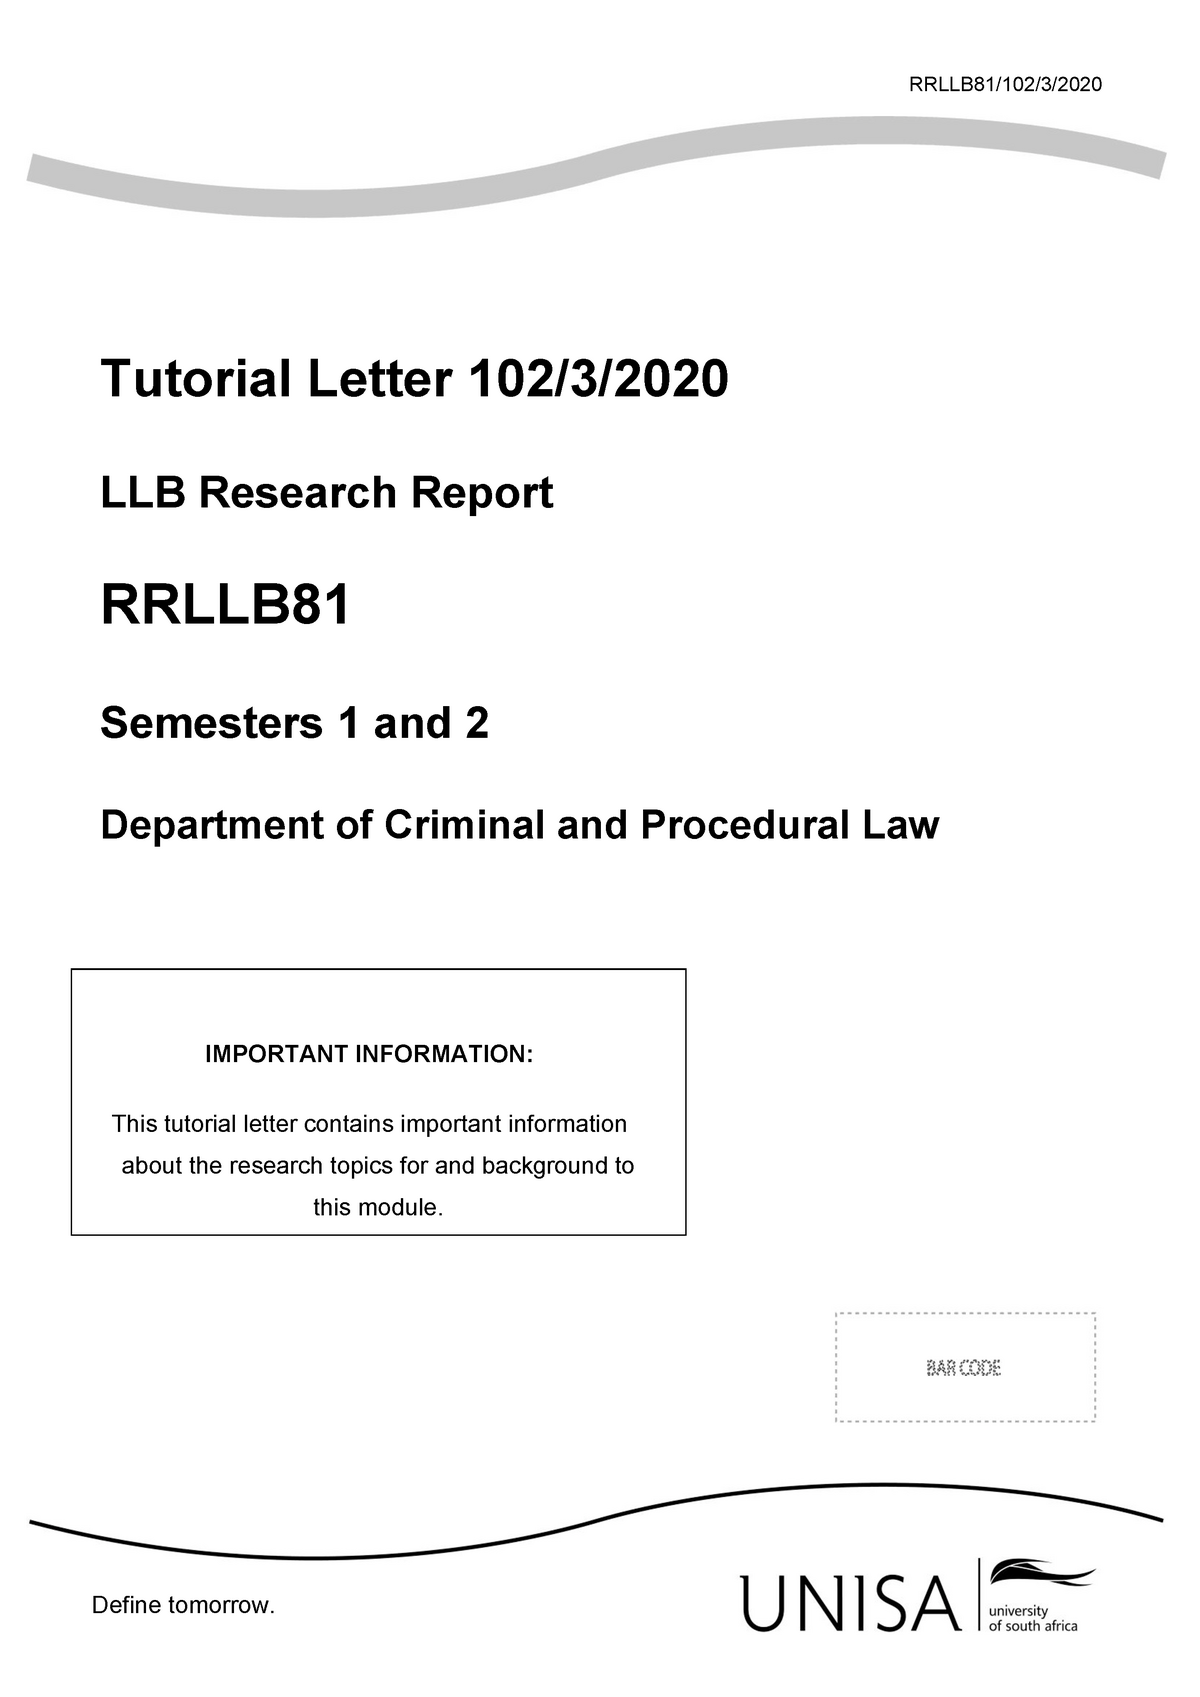 LLB Research Report TUT 3000 - RRLLB3000/3000/300/ Tutorial Letter 3000/300